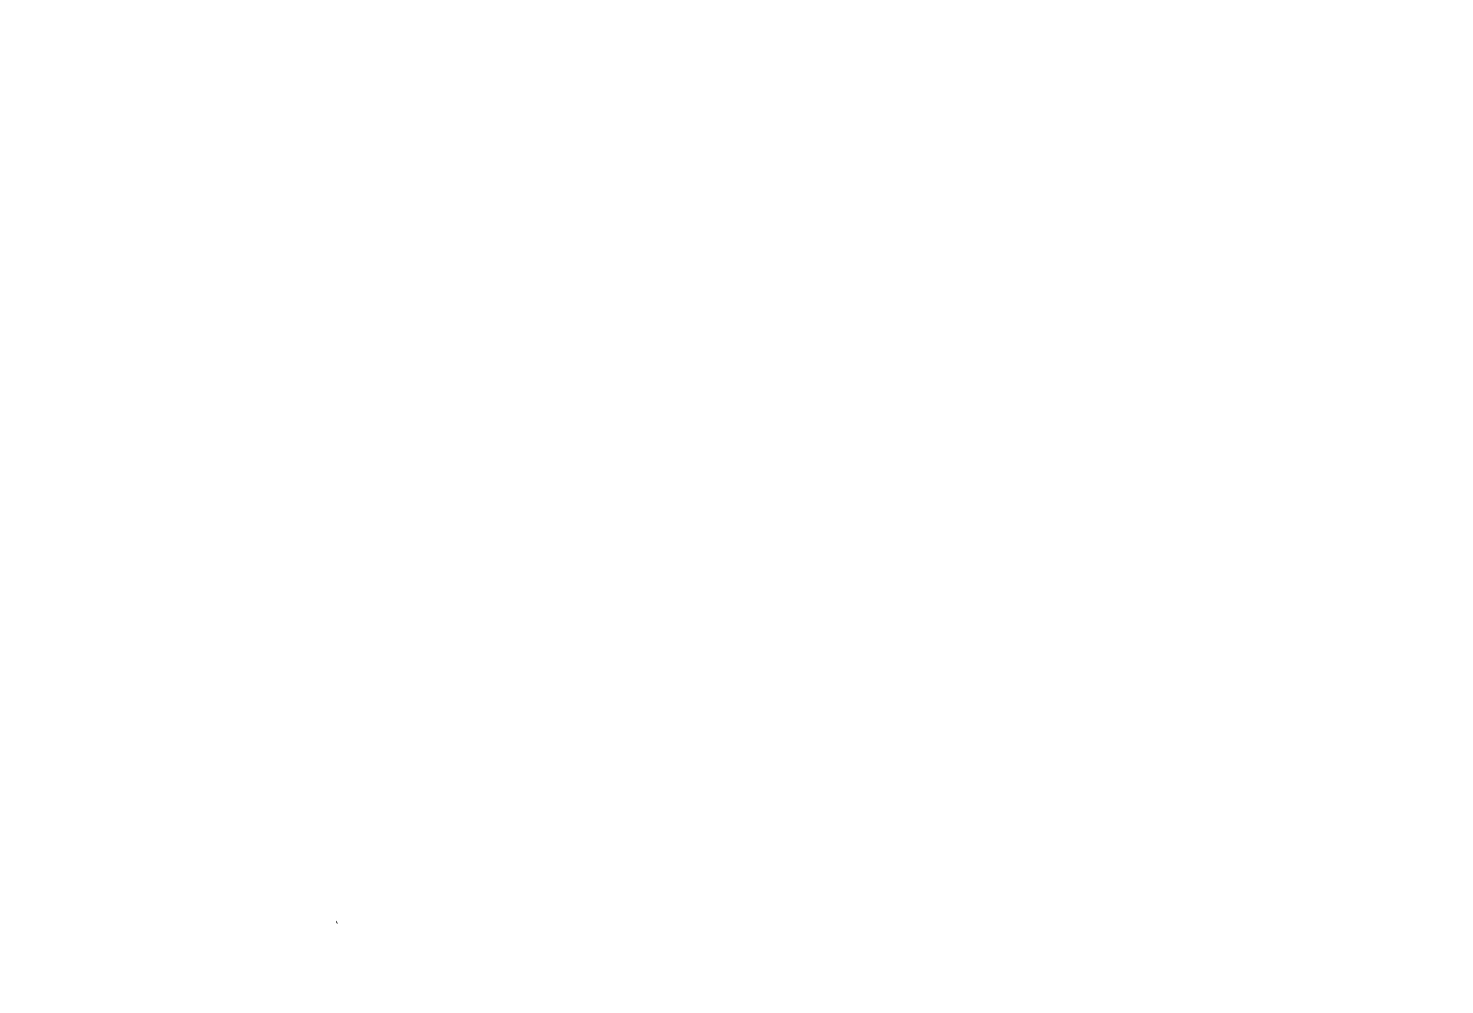 Town of Alto